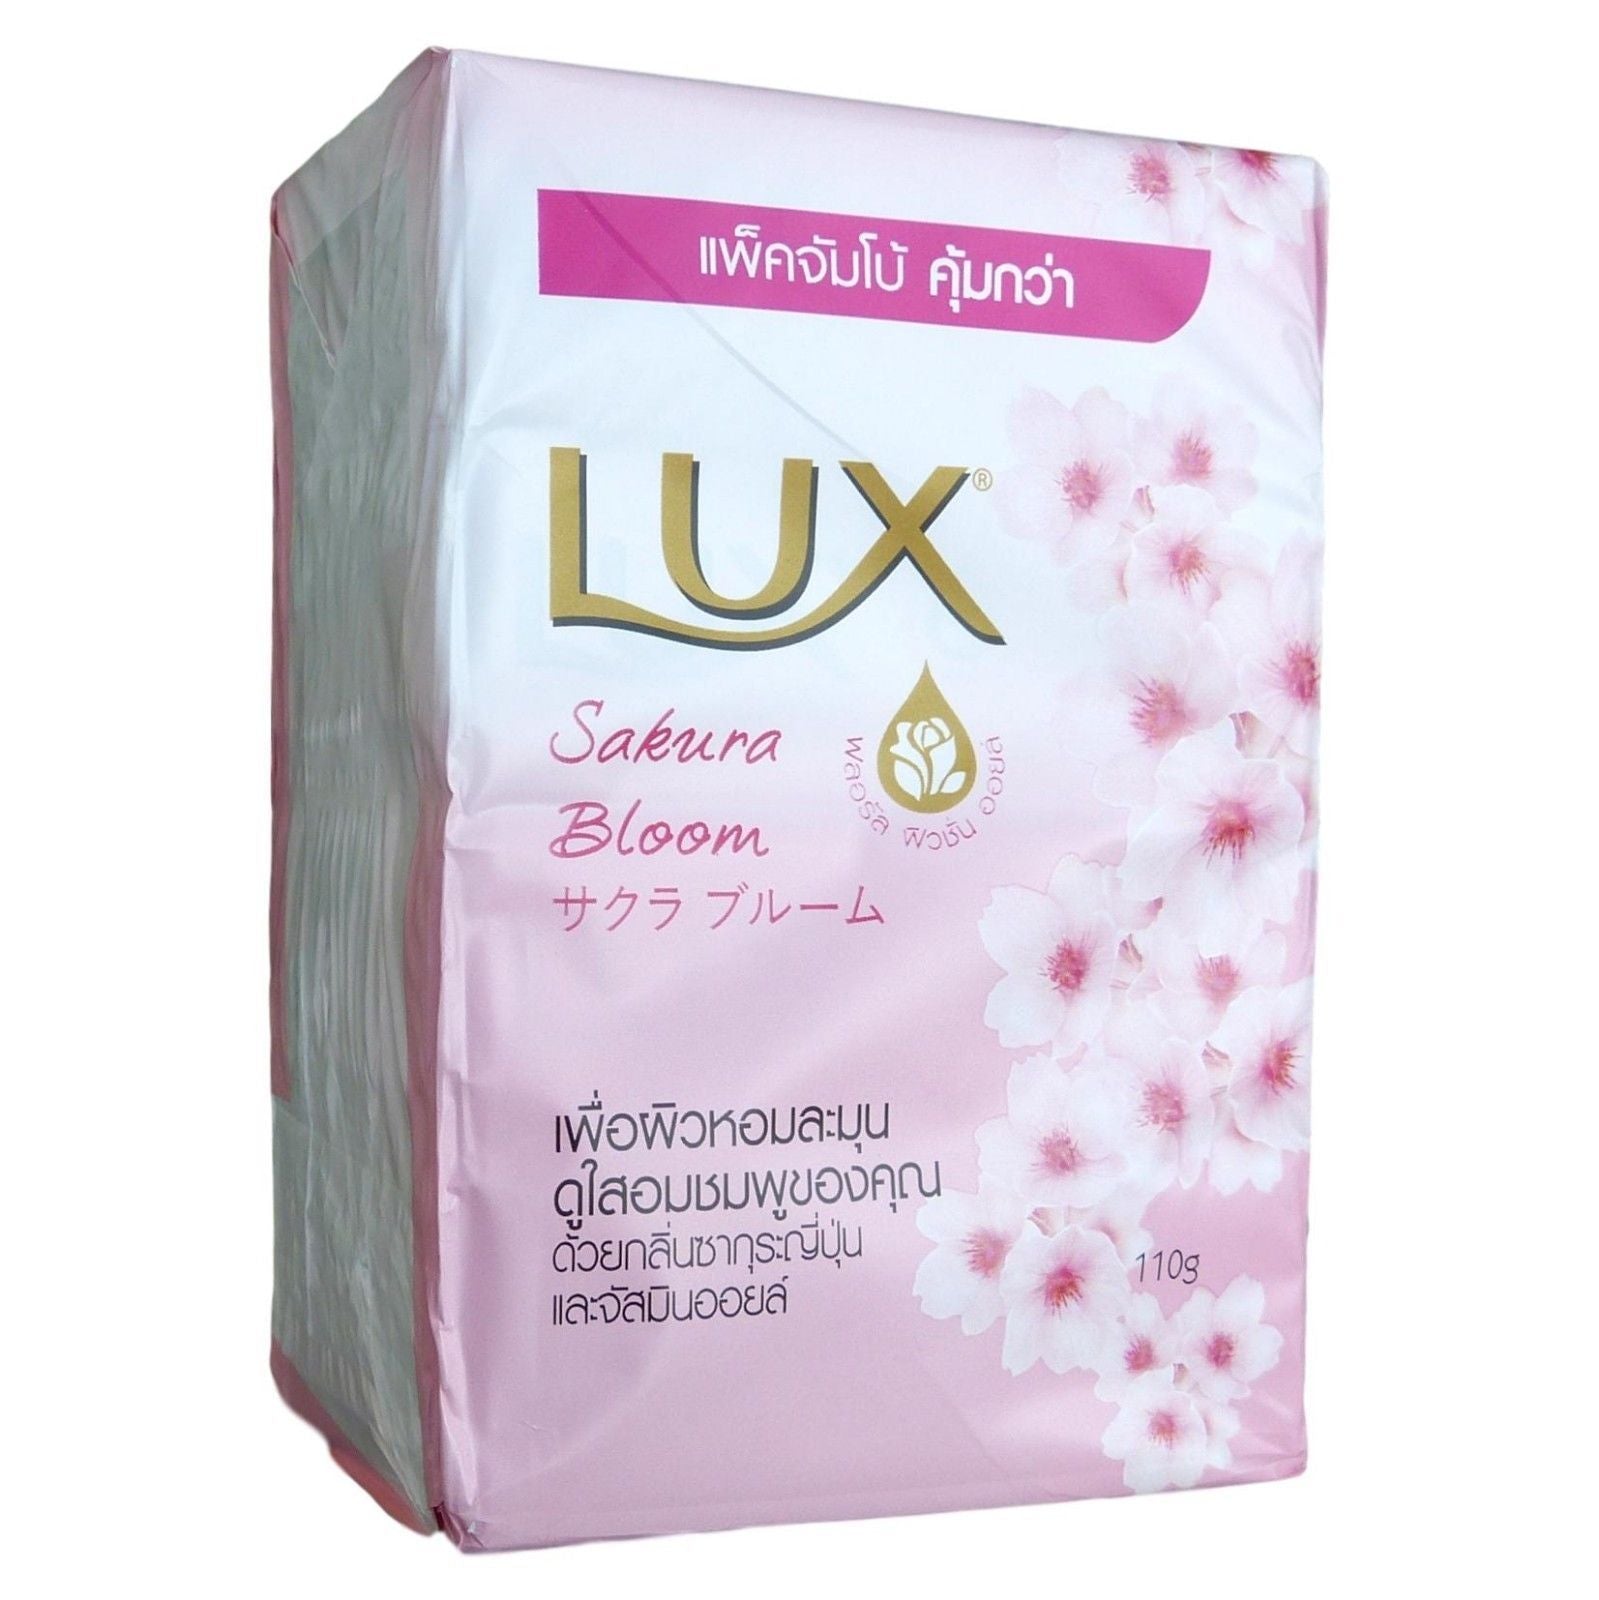 Lux Sakura Bloom Bar Soap 110 grams each Pack of 4 - Asian Beauty Supply